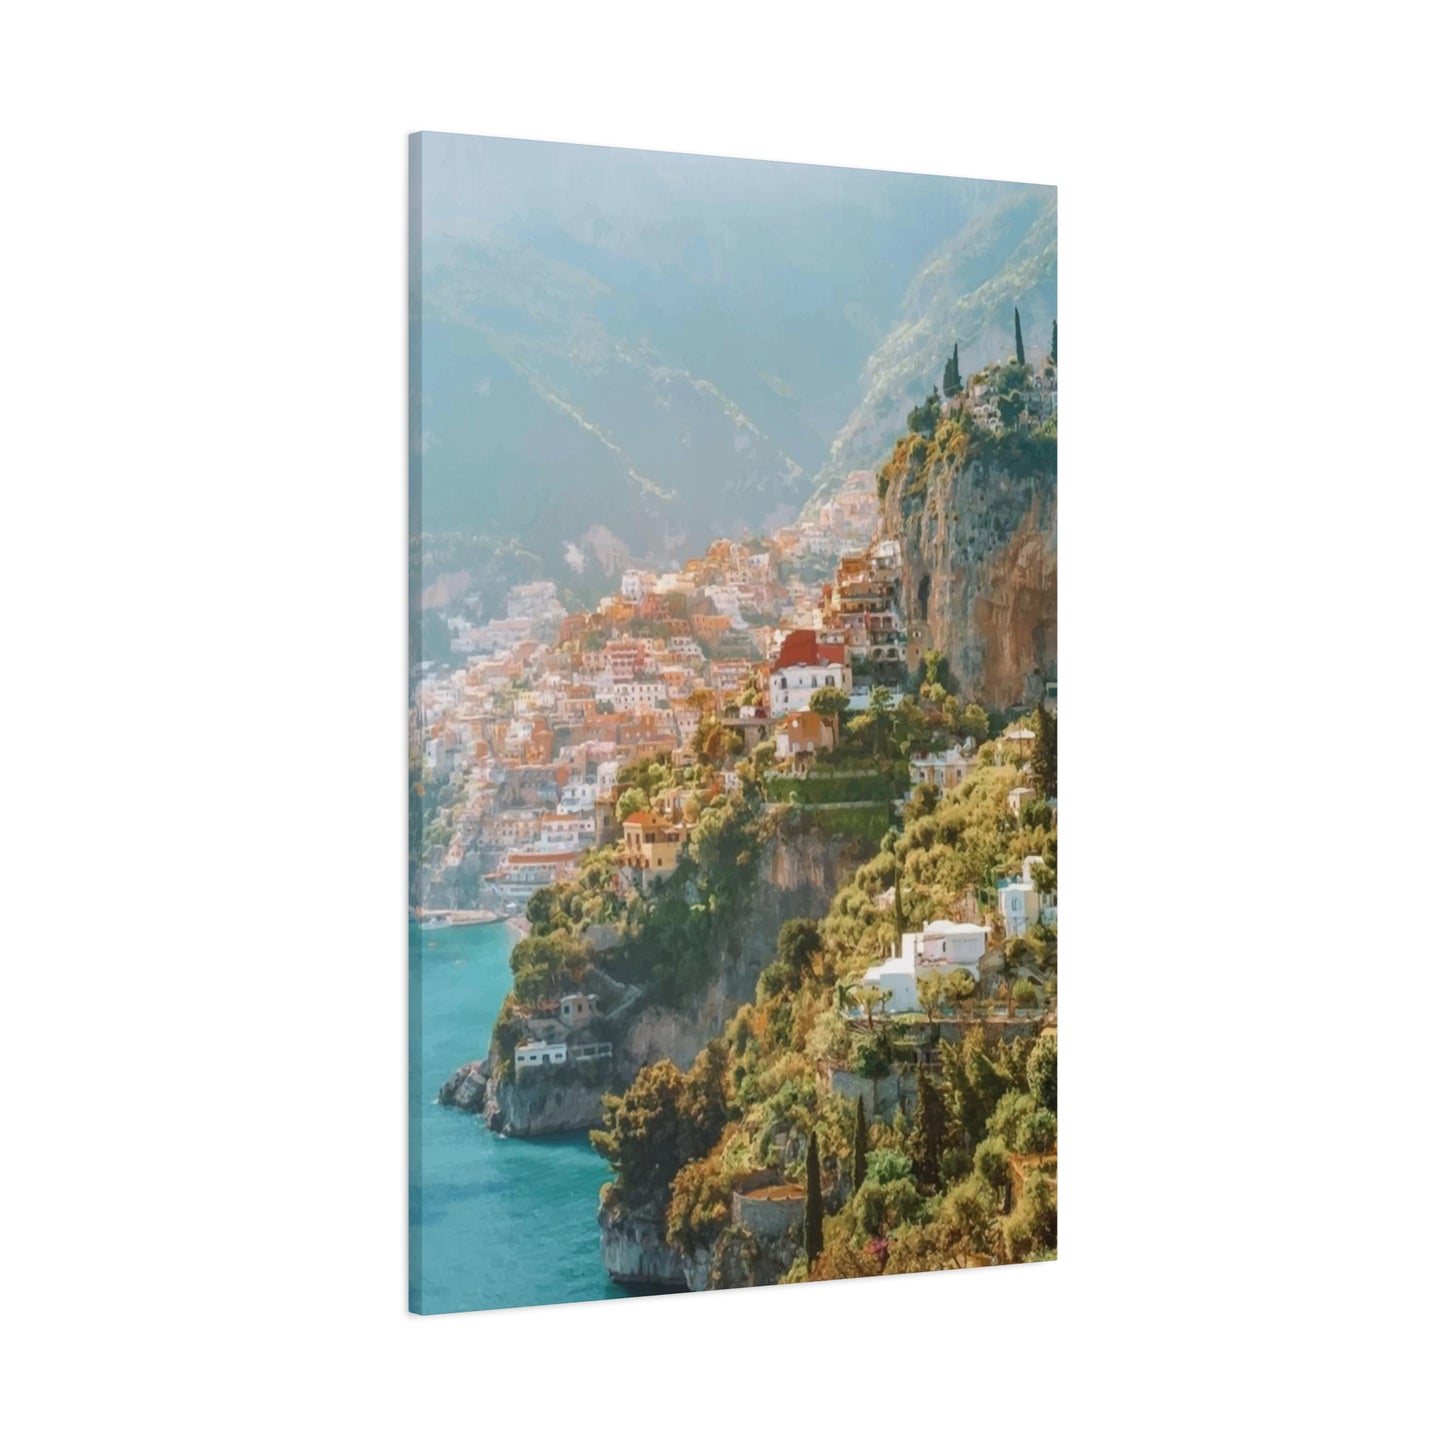 Italy Wall Art & Canvas Prints